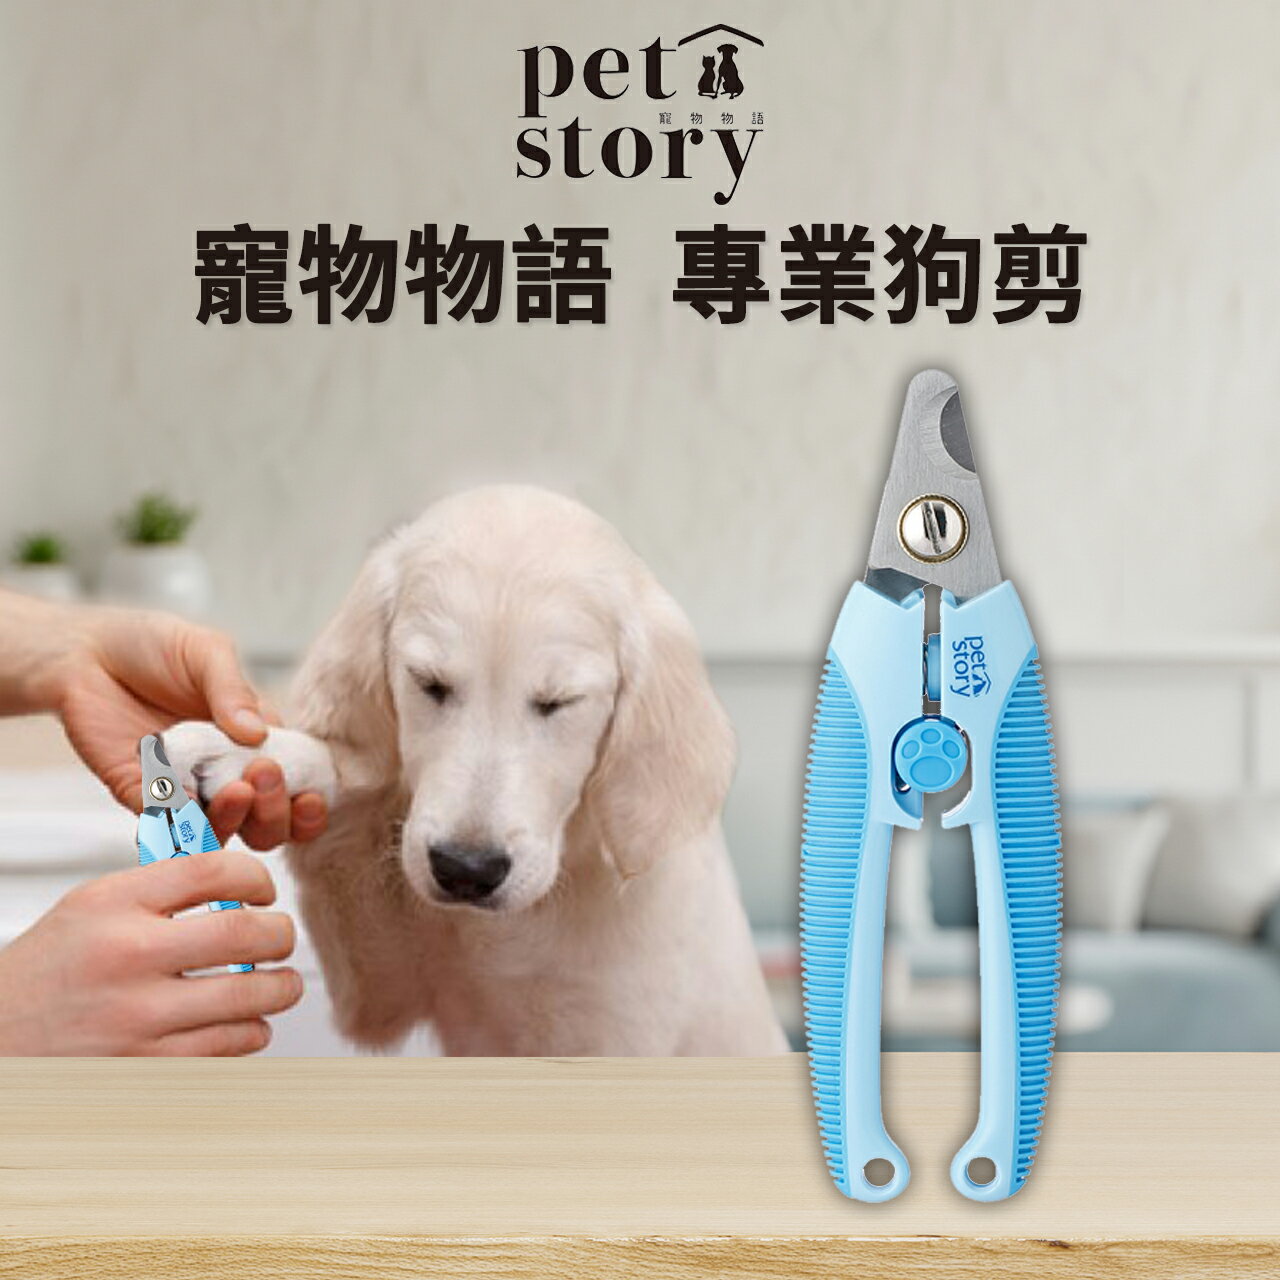 【PETMART】 寵物物語 pet story 專業狗剪